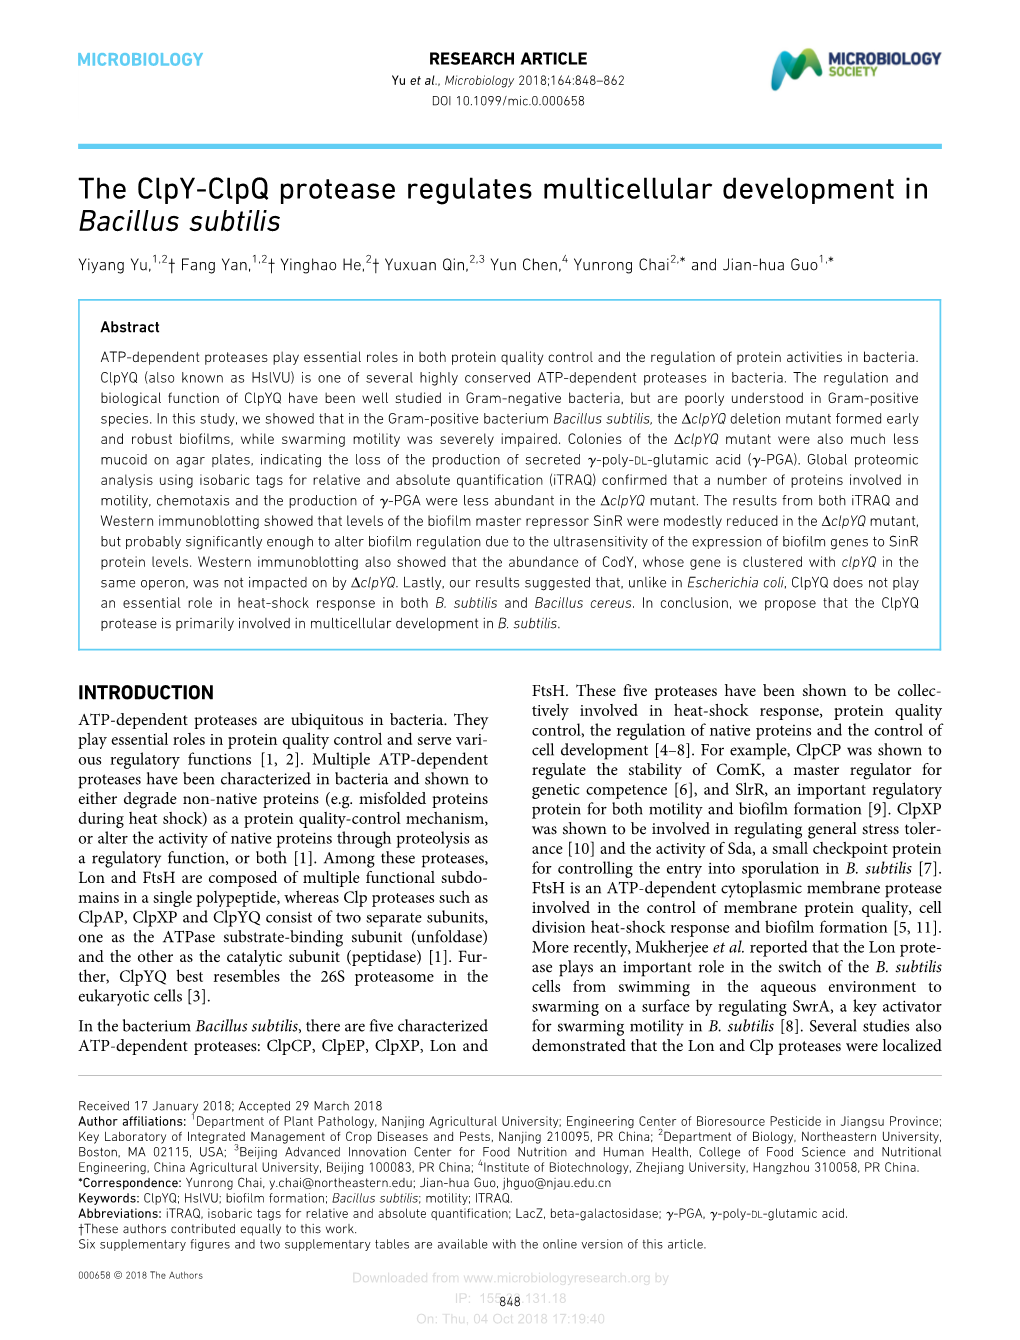 The Clpy-Clpq Protease Regulates Multicellular Development in Bacillus Subtilis